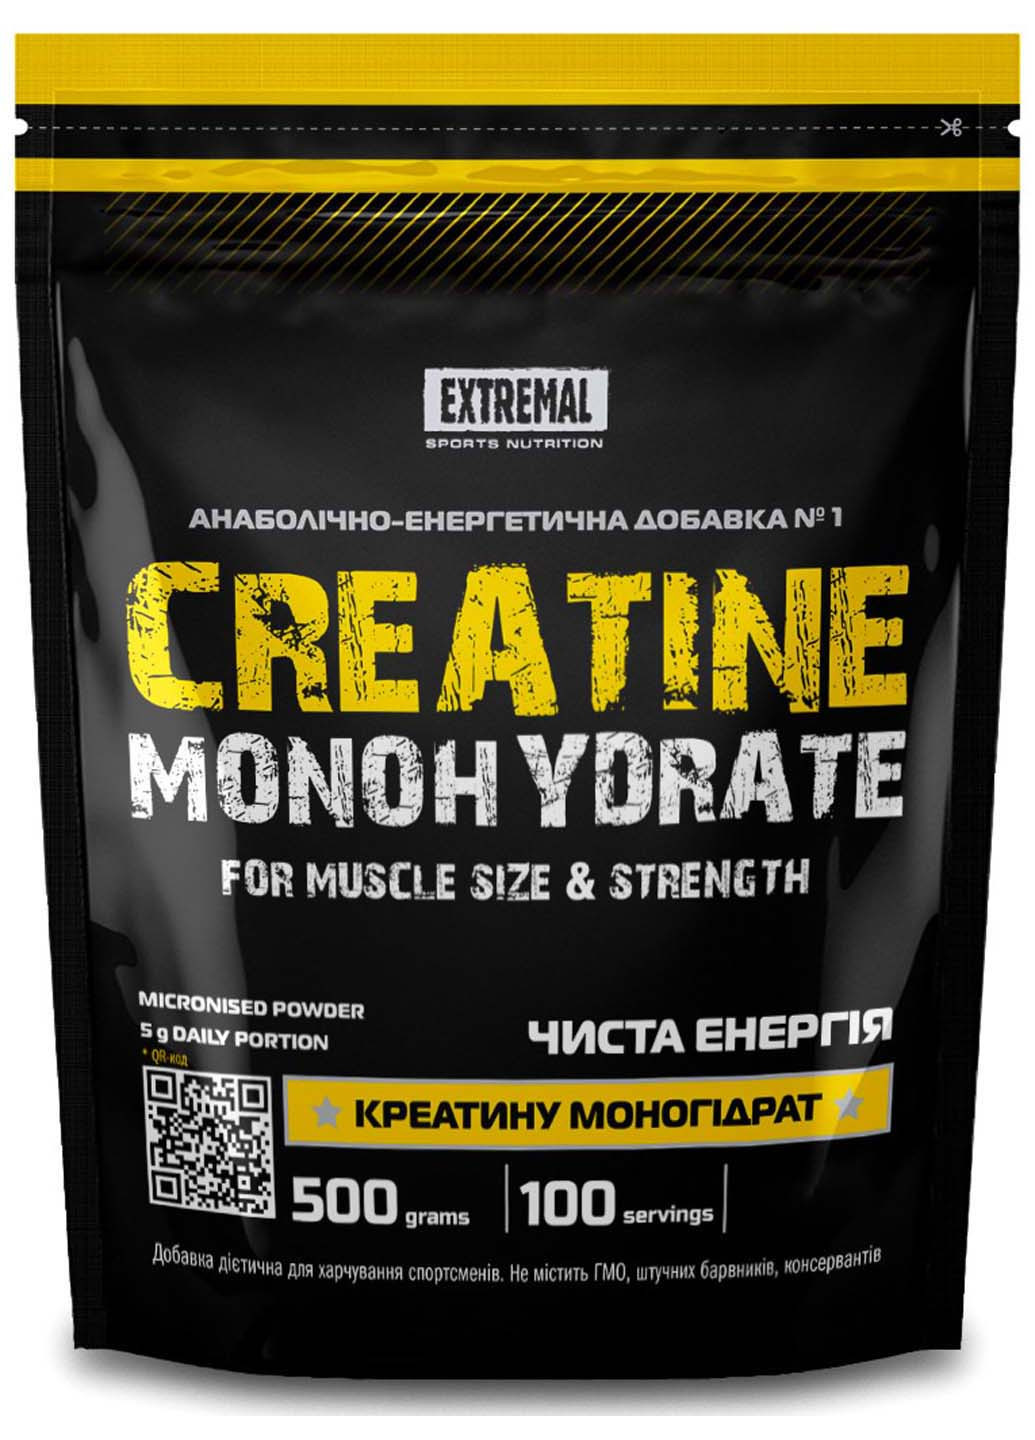 Чистый креатина моногидрат 500 г пакет Сreatine monohydrate в порошке Extremal (254070677)